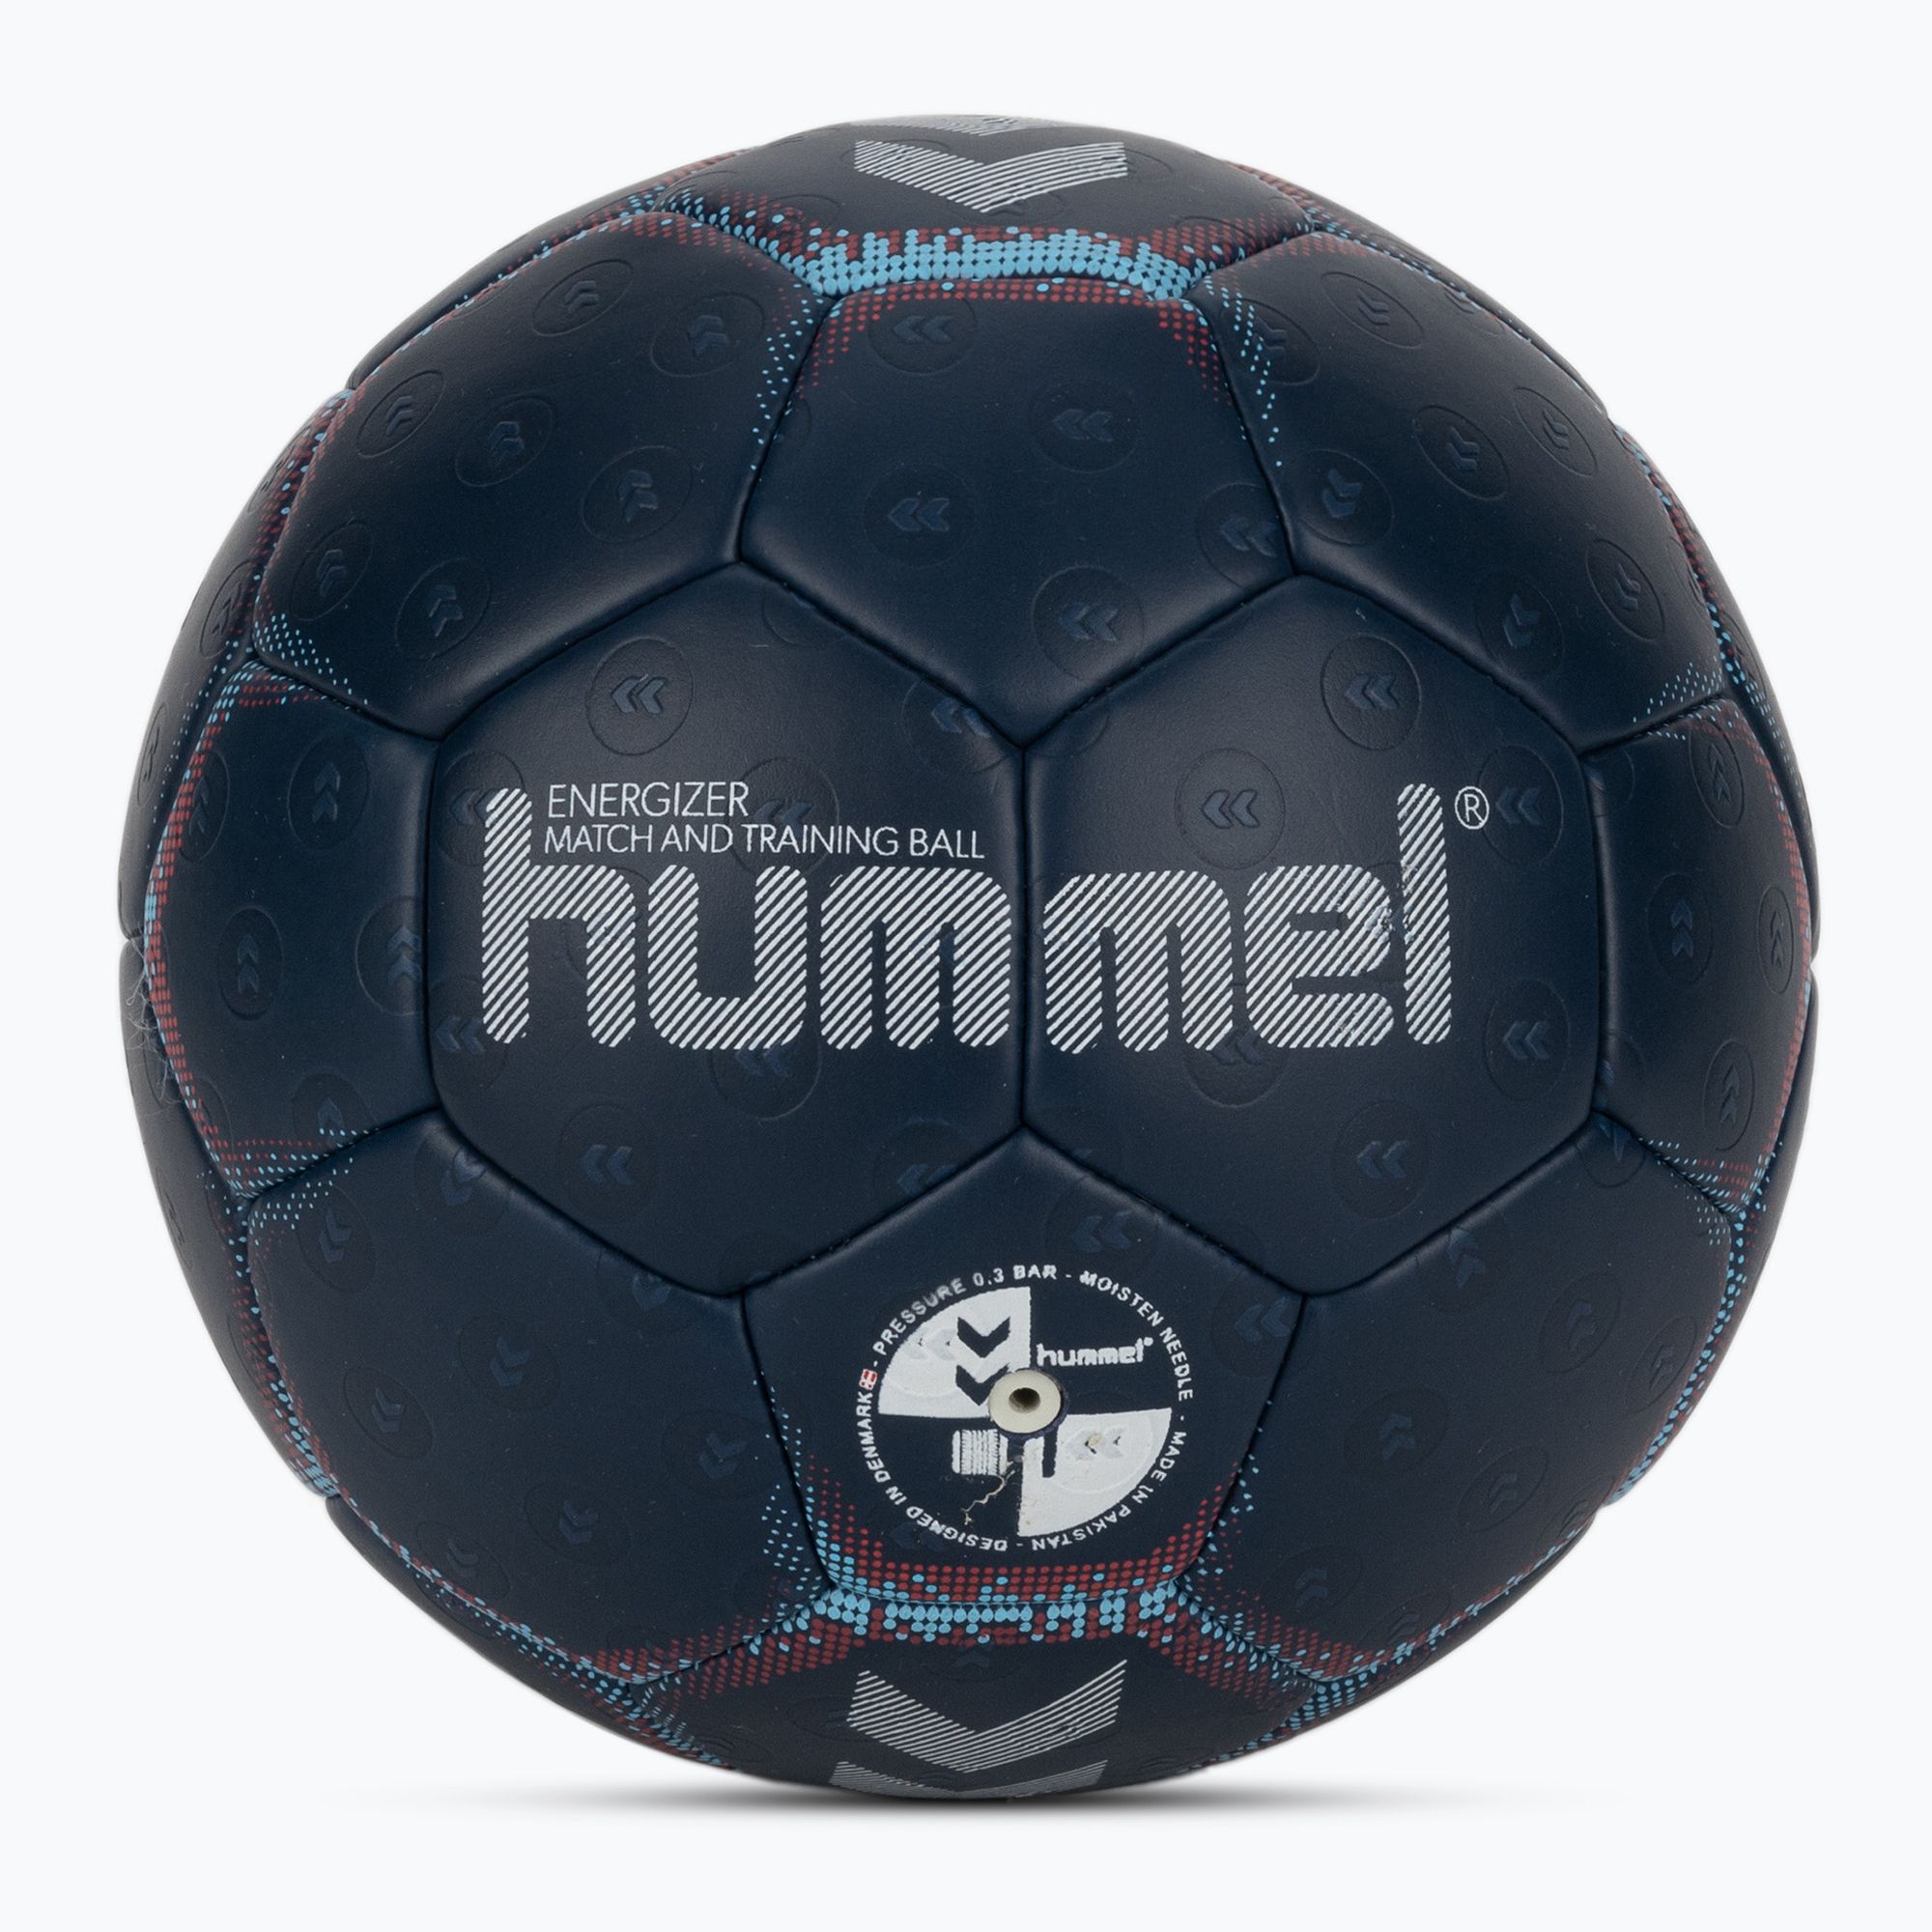 Hummel Energizer HB handball marine/white/red size 1